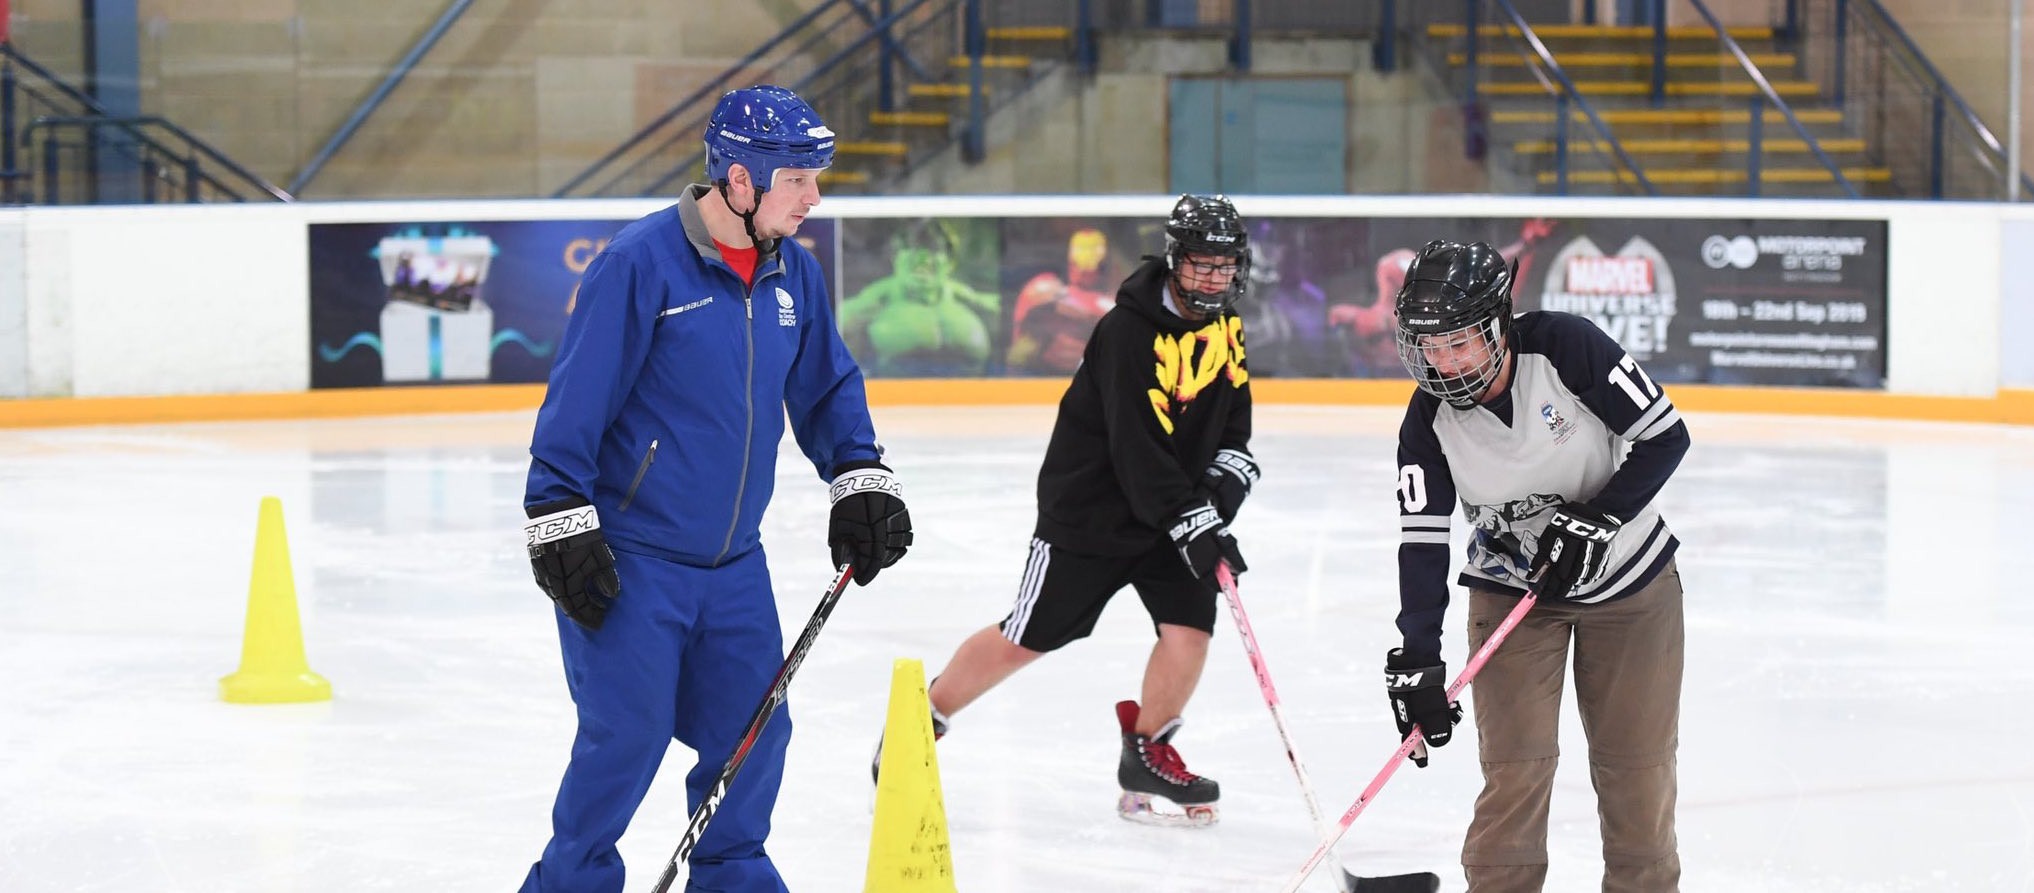 Team GB and Ice Hockey UK hold free ice hockey taster session